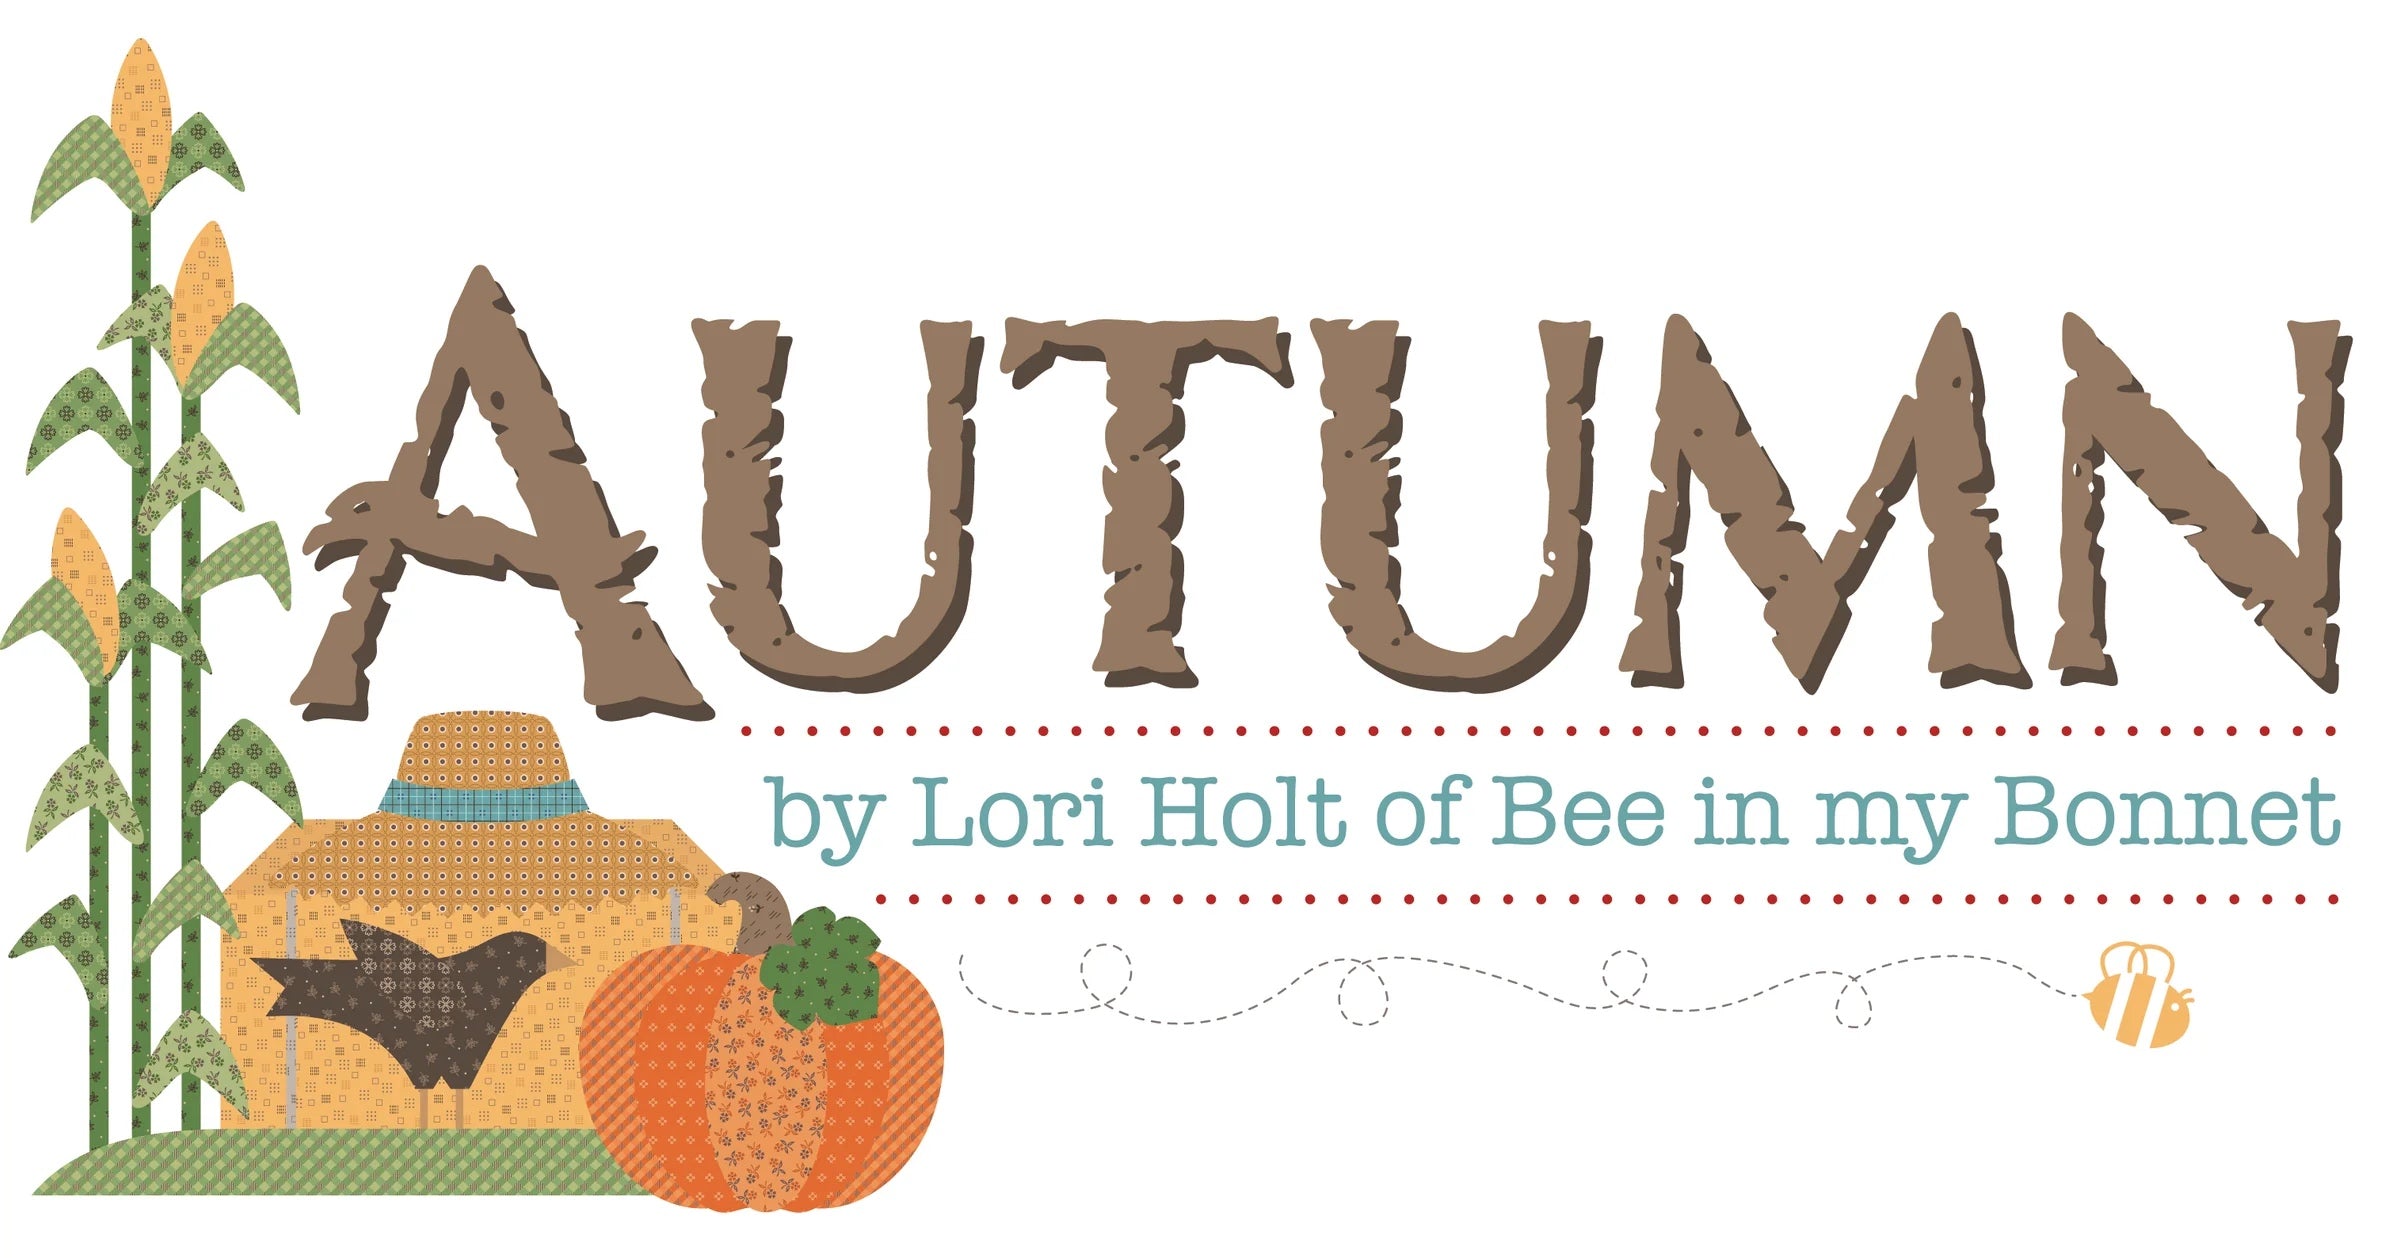 Autumn | 10" Precut Squares by Lori Holt for Riley Blake | 42pcs